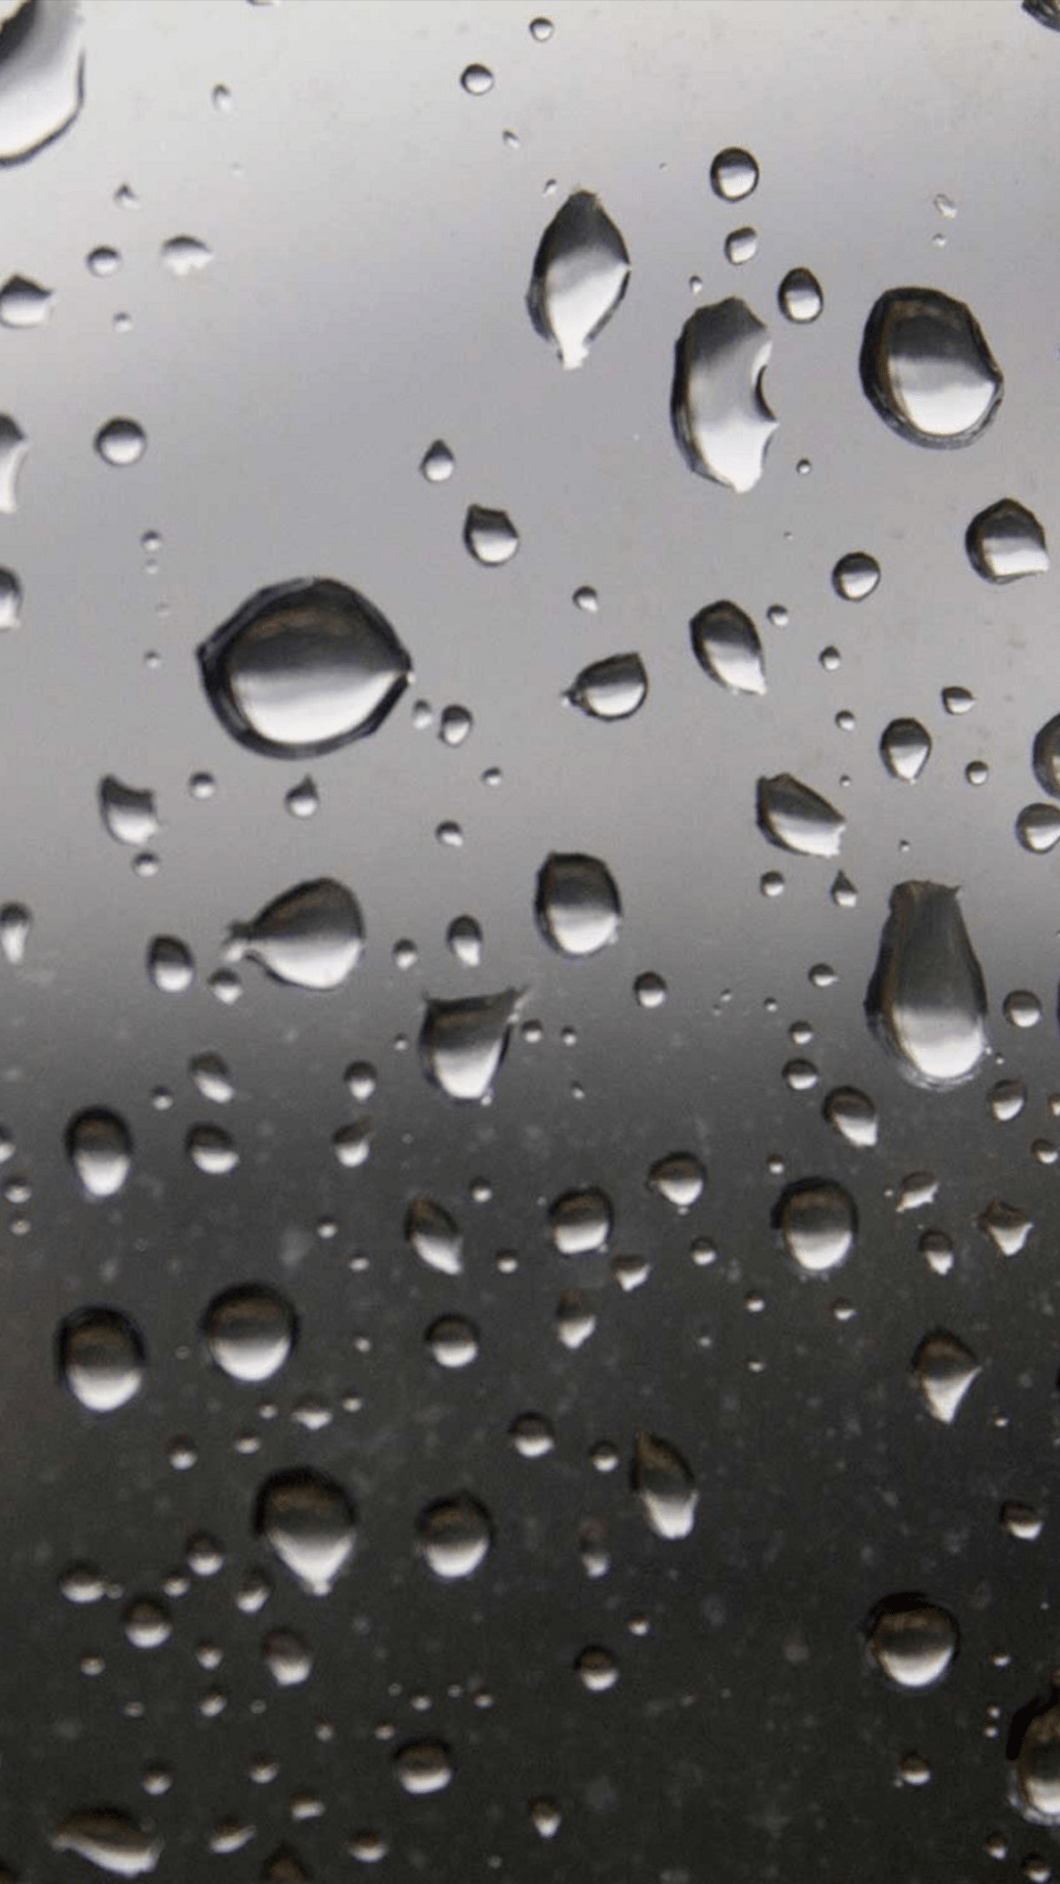 Wallpaper Of Water Drops